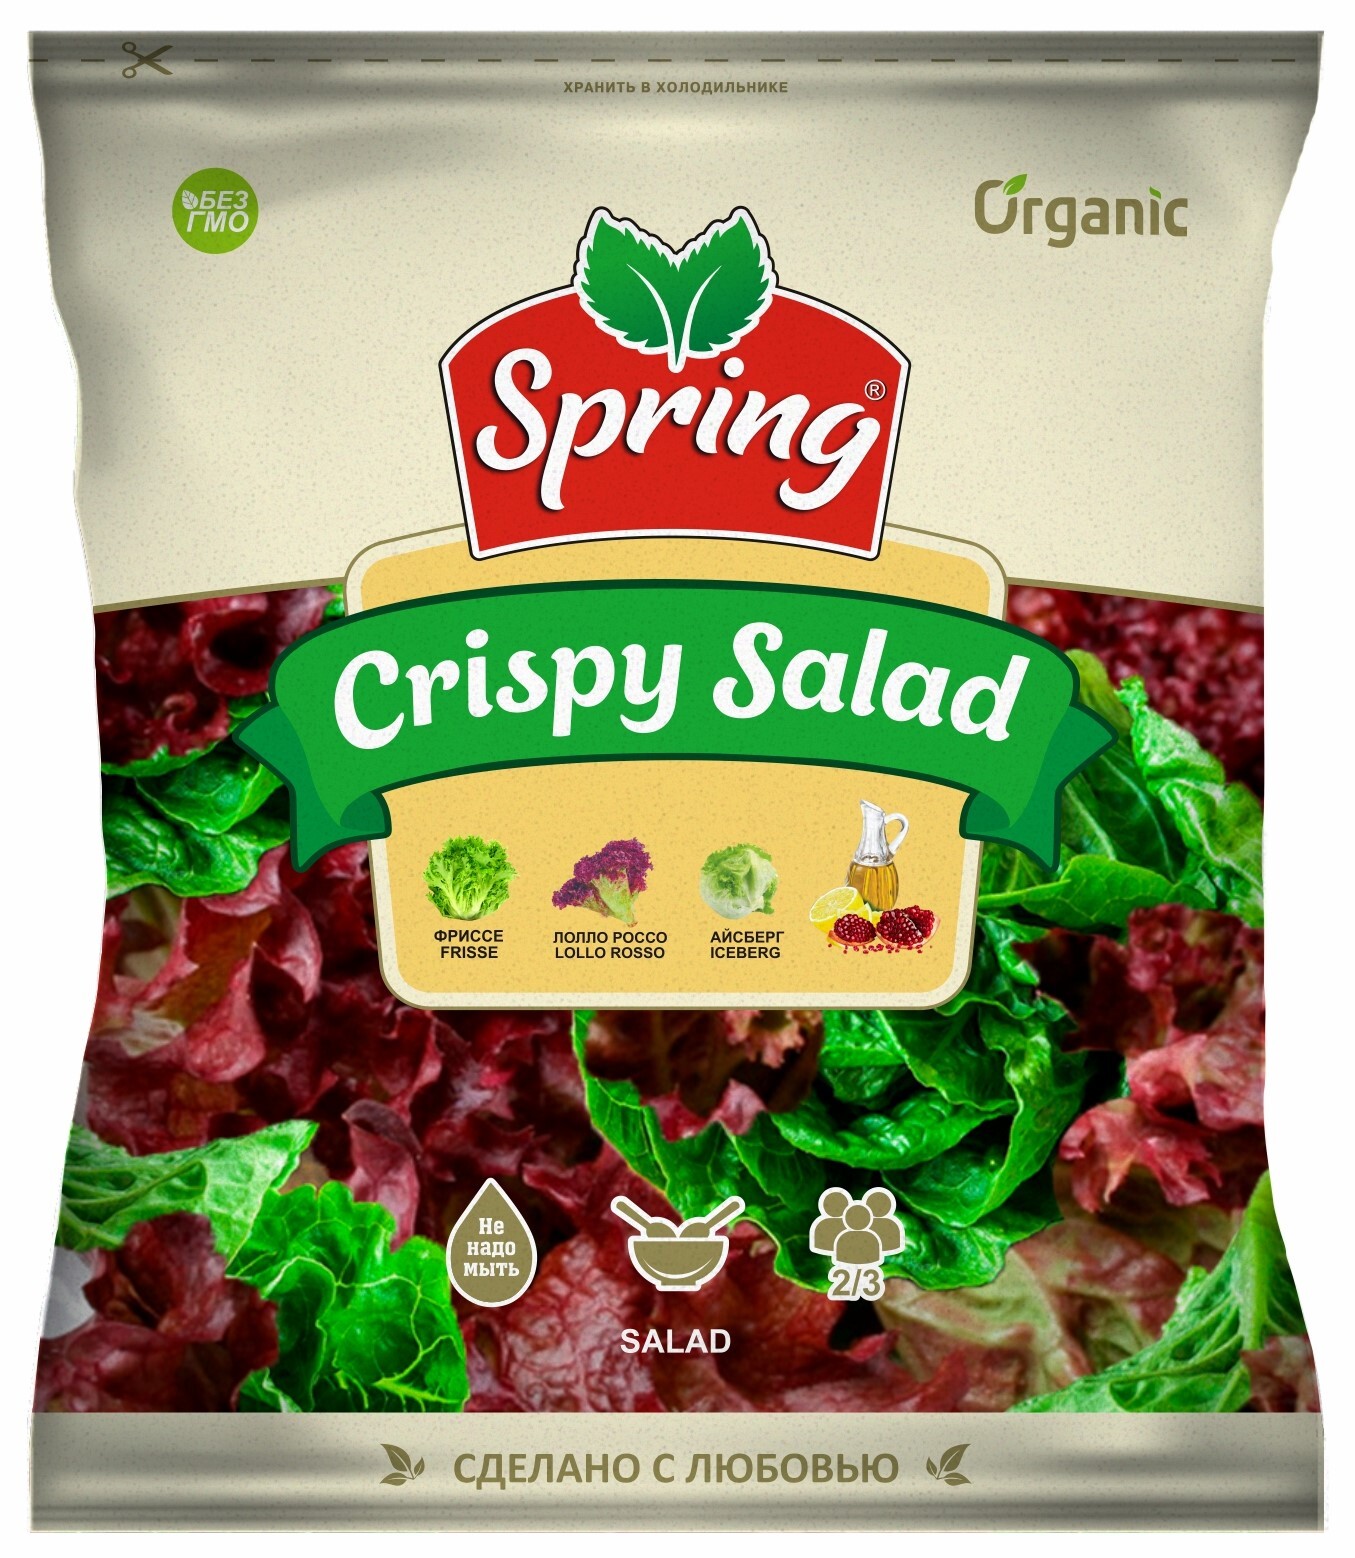 Crispy Salad